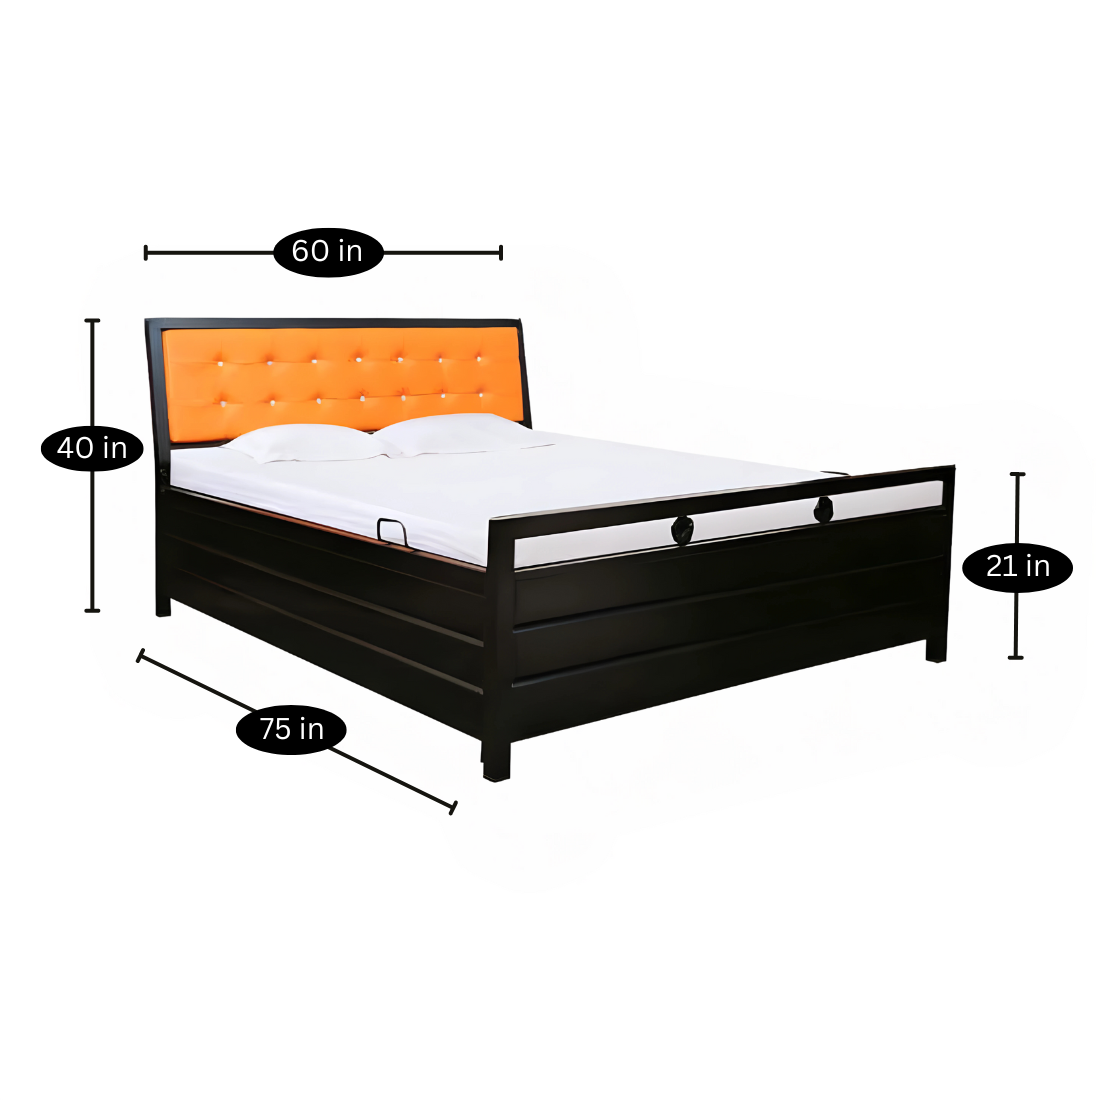 Heath Hydraulic Storage Queen Metal Bed with Orange Cushion Headrest (Color - Black)